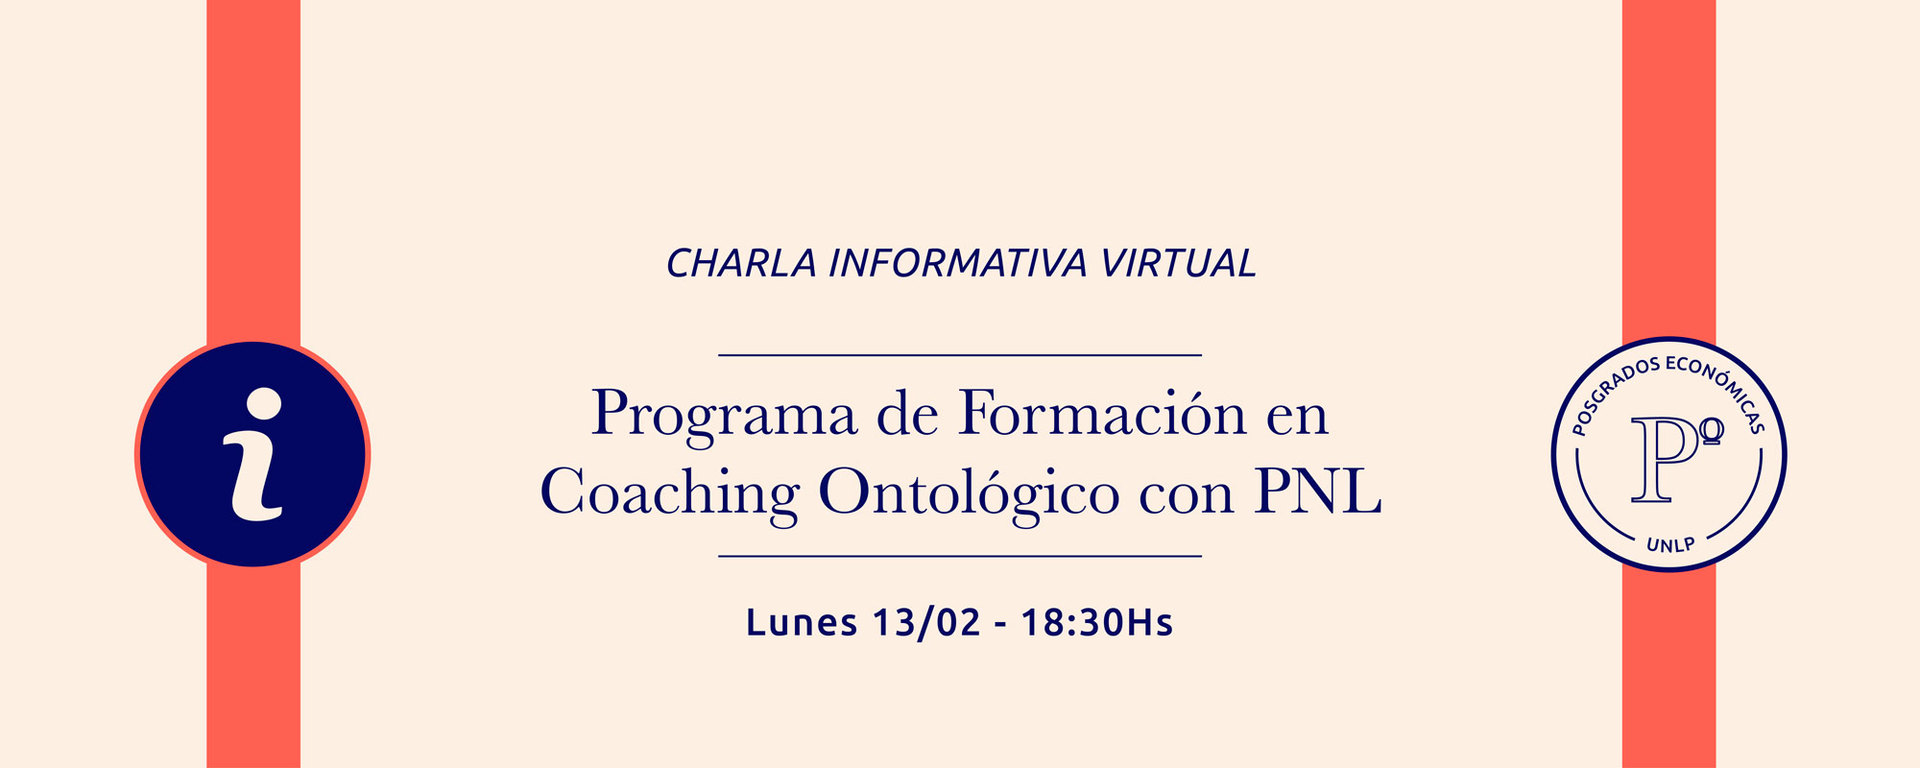 Charla informativa del Programa en Coaching Ontológico con PNL